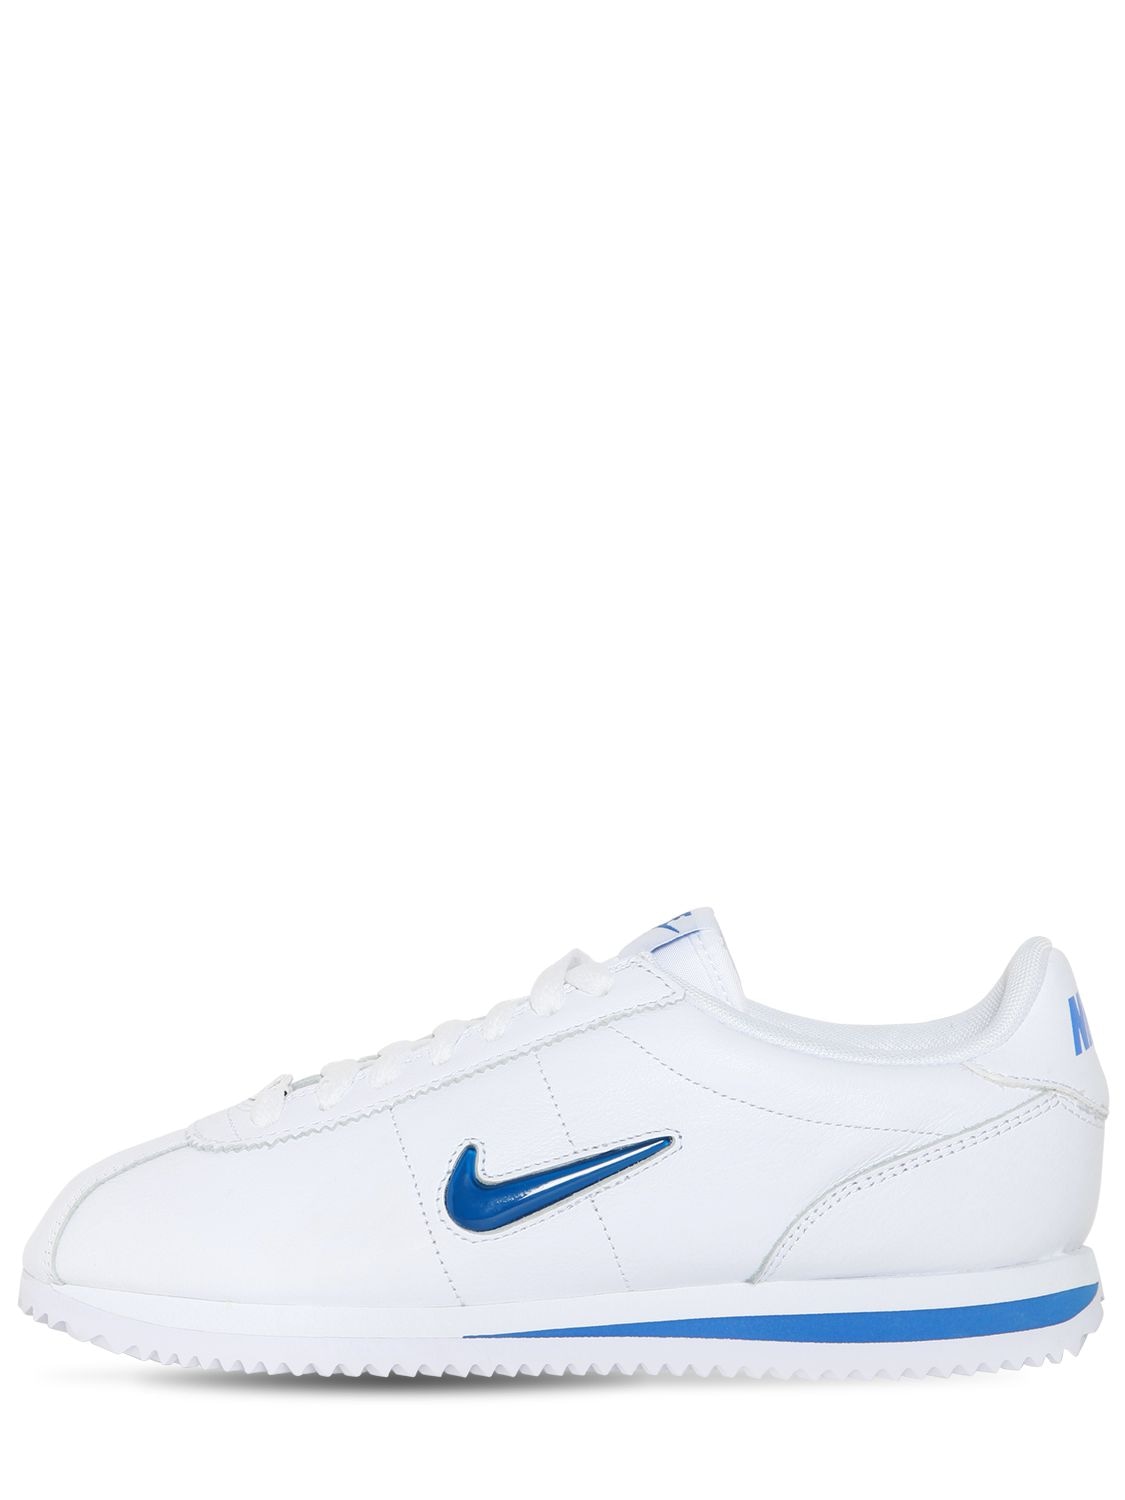 Nike Cortez Basic Jewel 18 Sneakers In White/blue